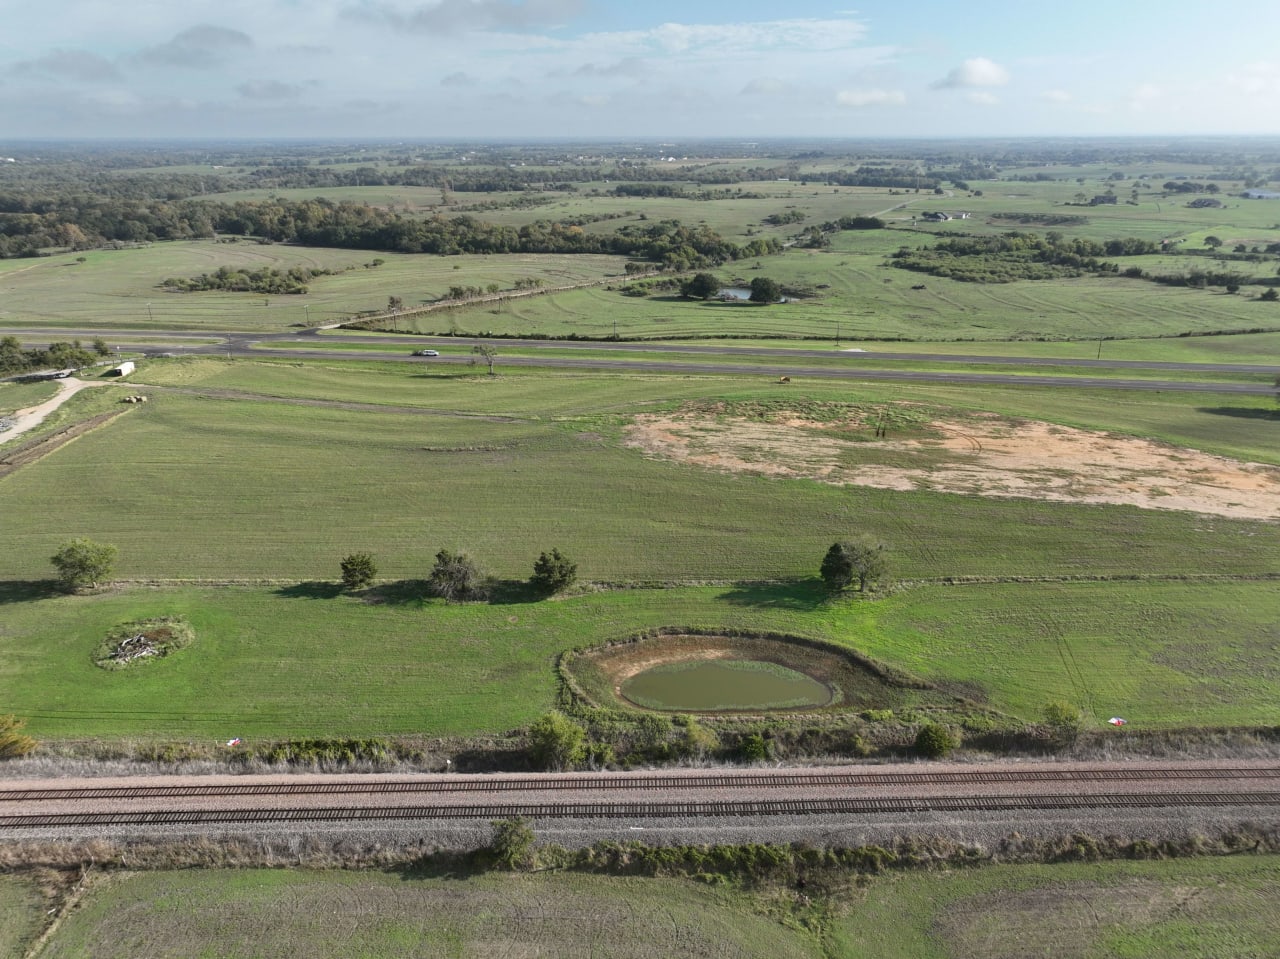 6.358-Acre Development-Ready Land on Highway 36 South, Brenham, TX - Tract 2